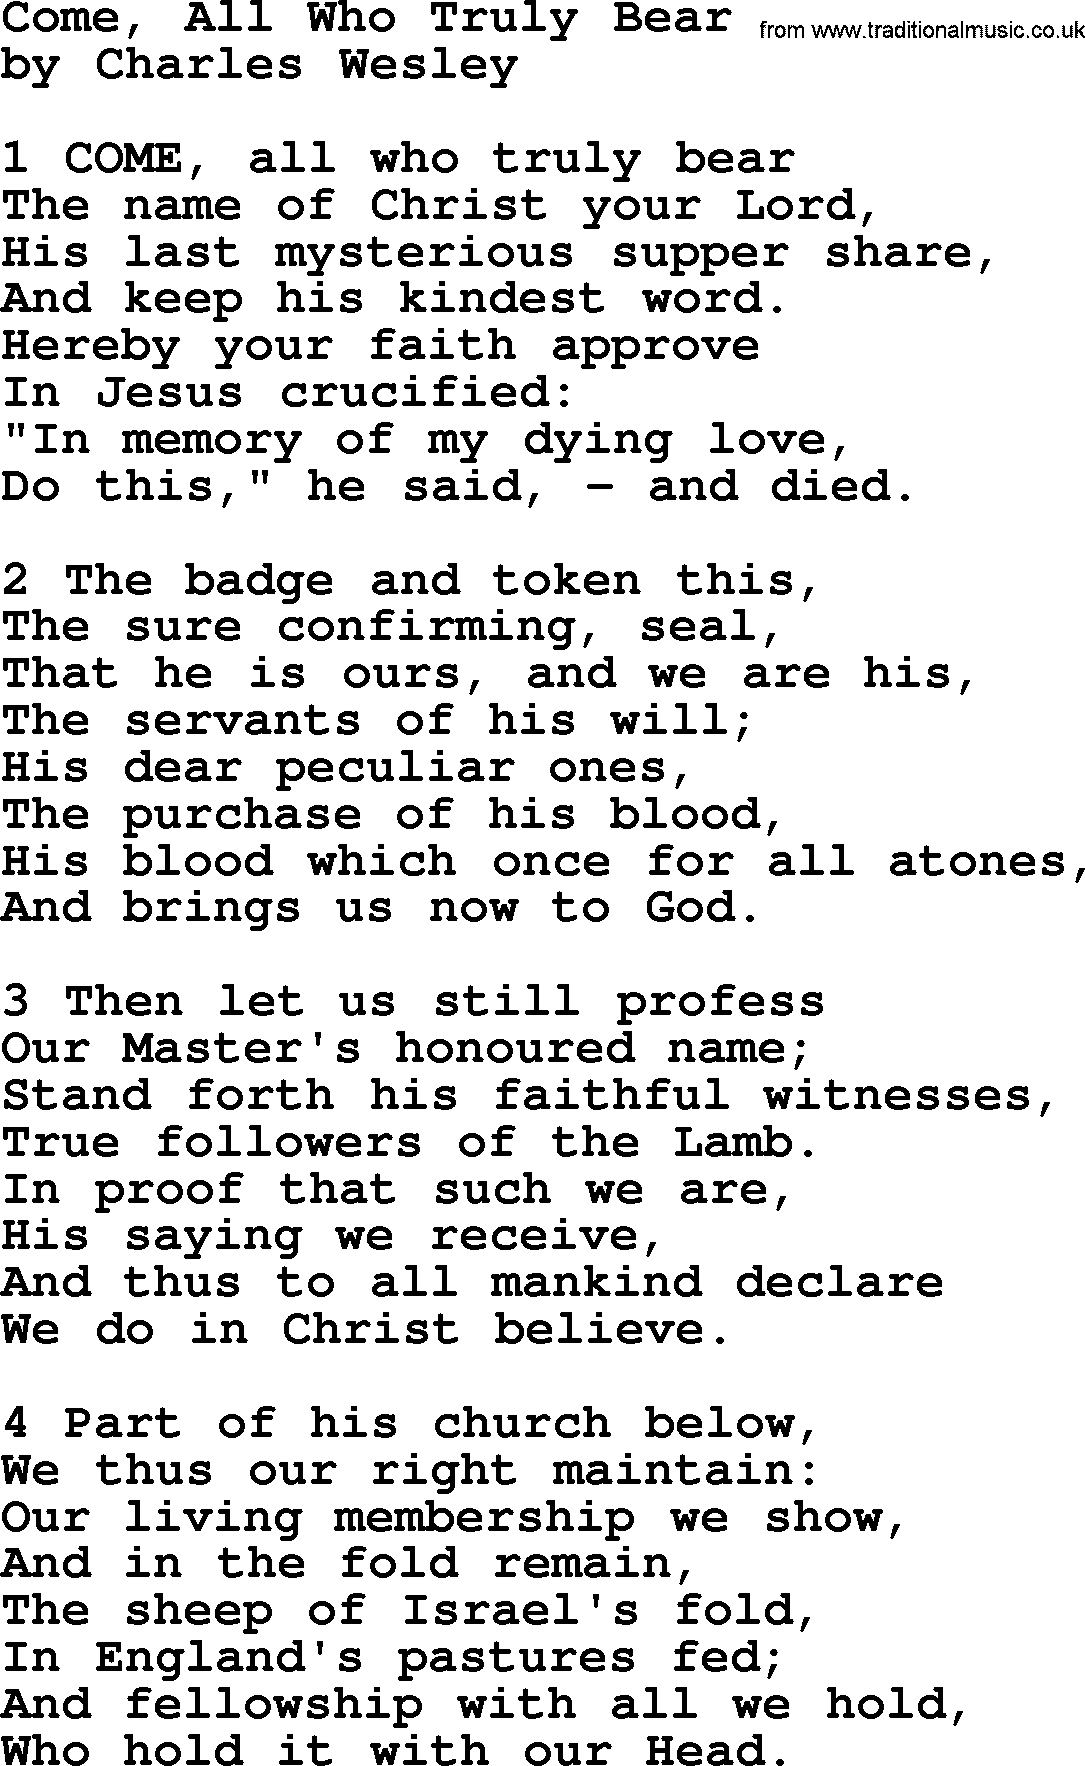 Charles Wesley hymn: Come, All Who Truly Bear, lyrics